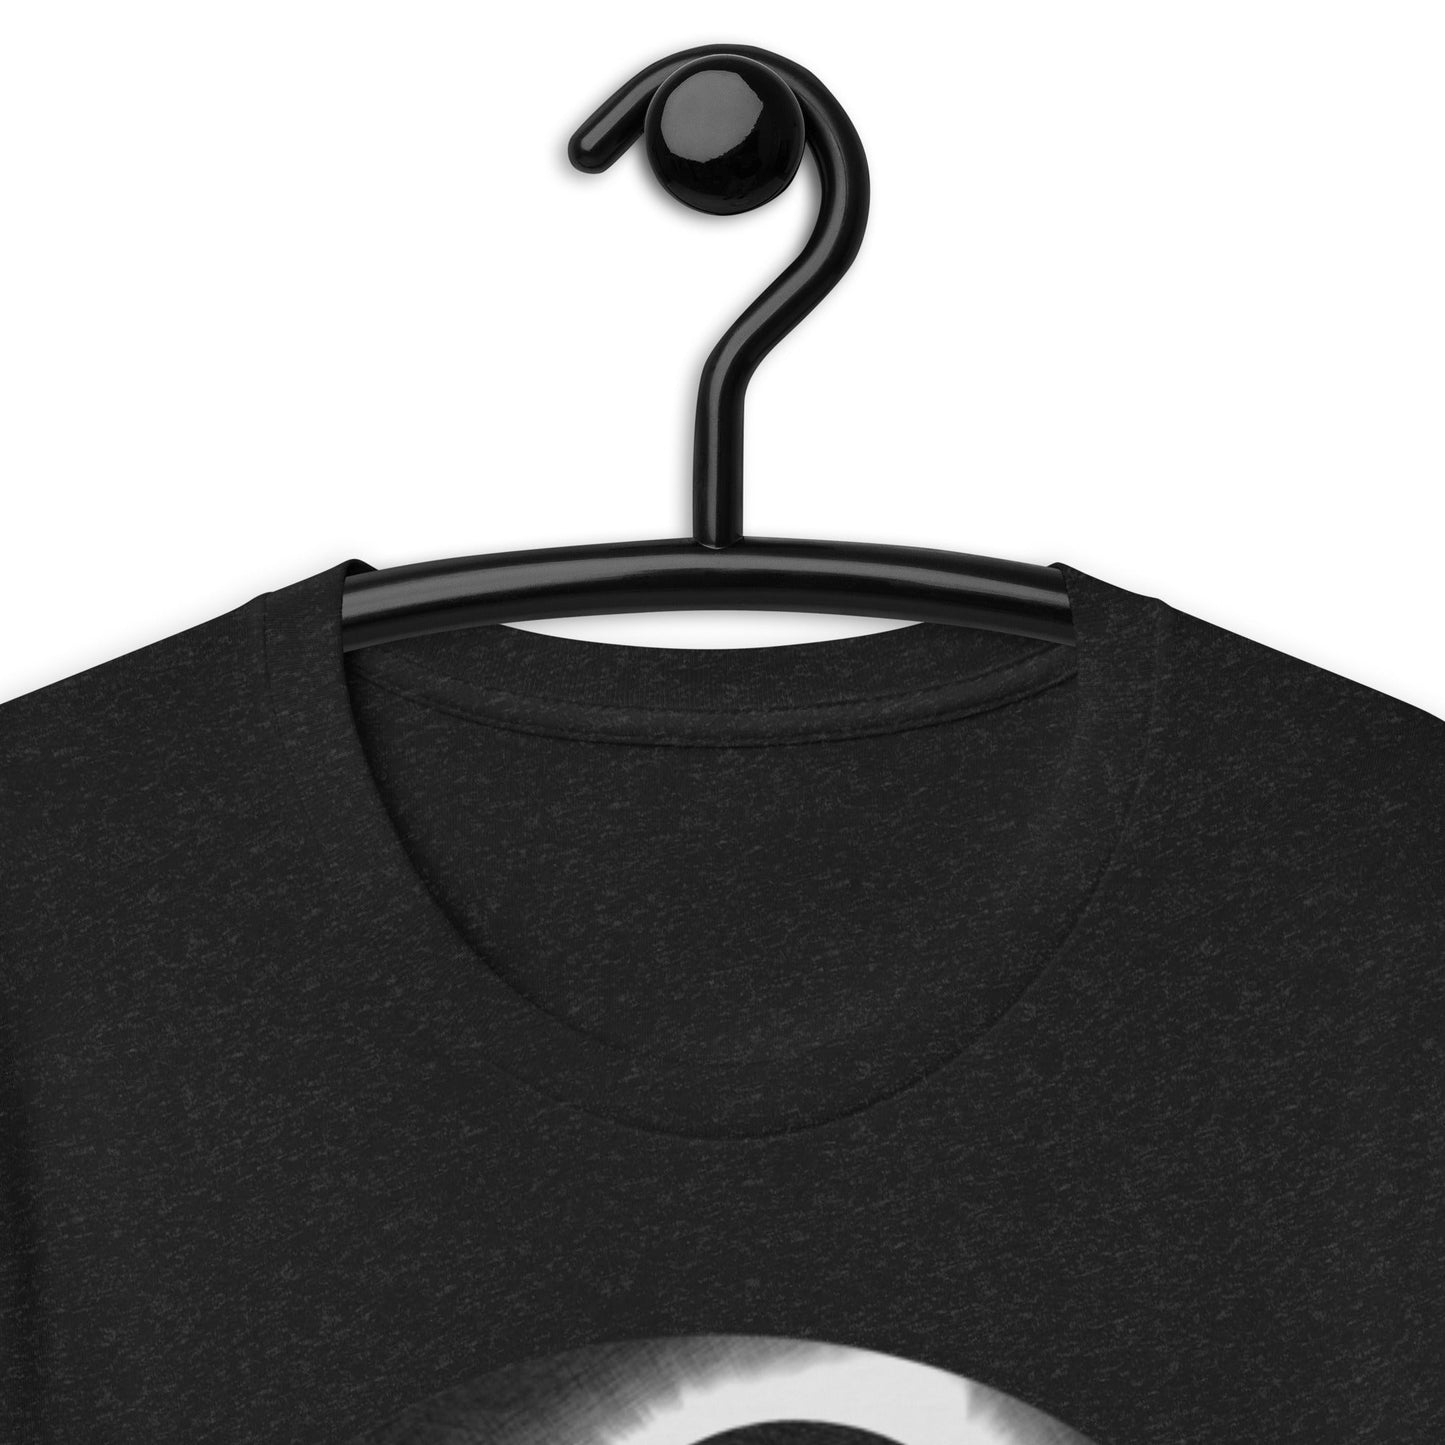 Eclipse - Bella Canvas T-Shirt - Science Label